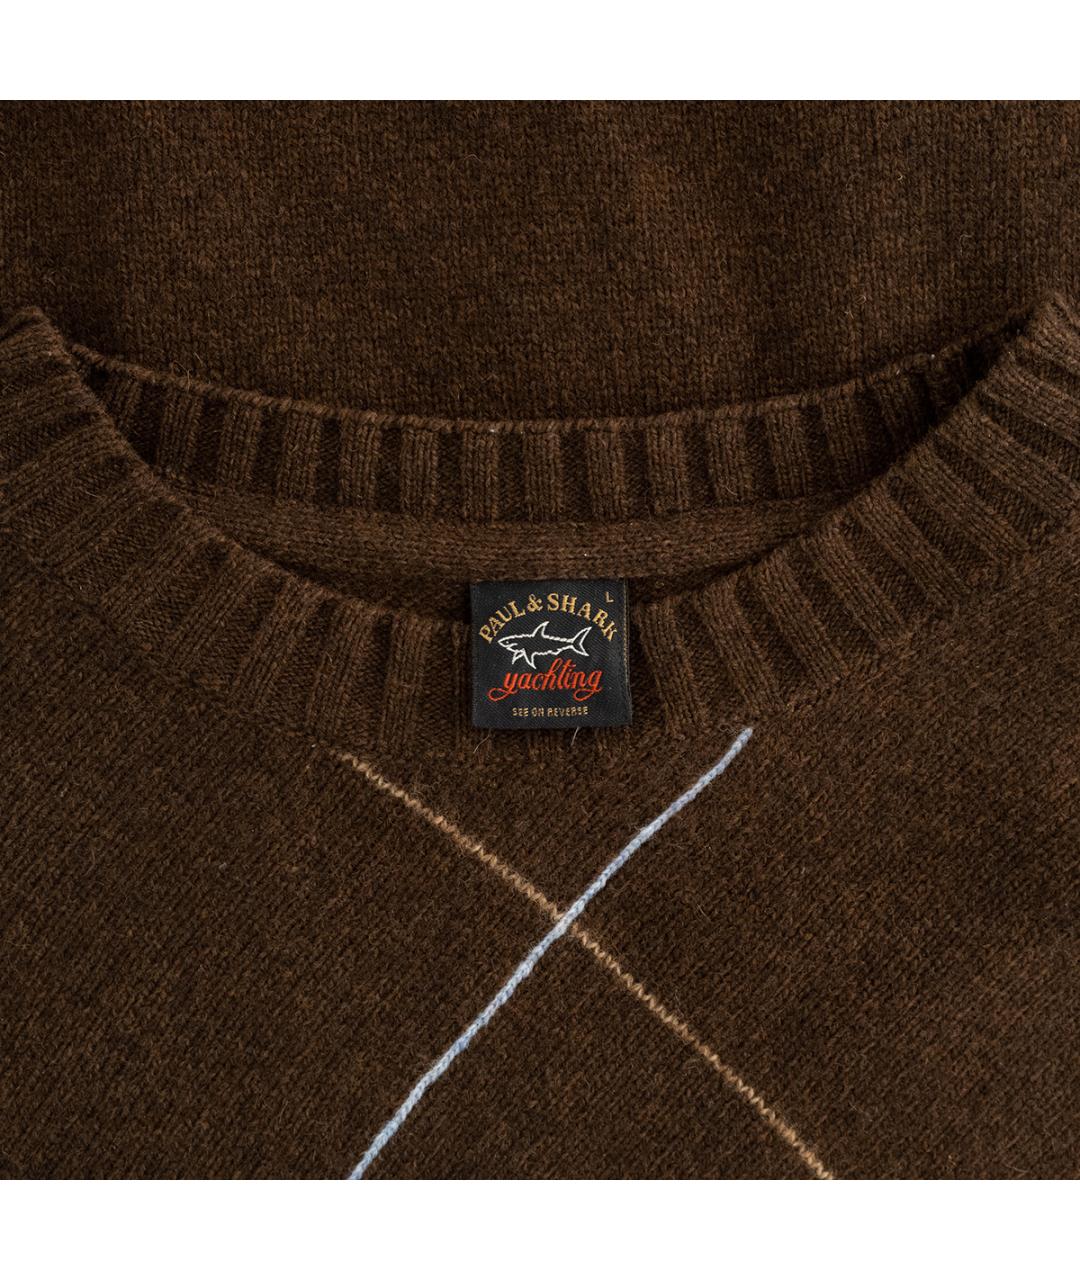 PAUL & SHARK Коричневый шерстяной джемпер / свитер, фото 3